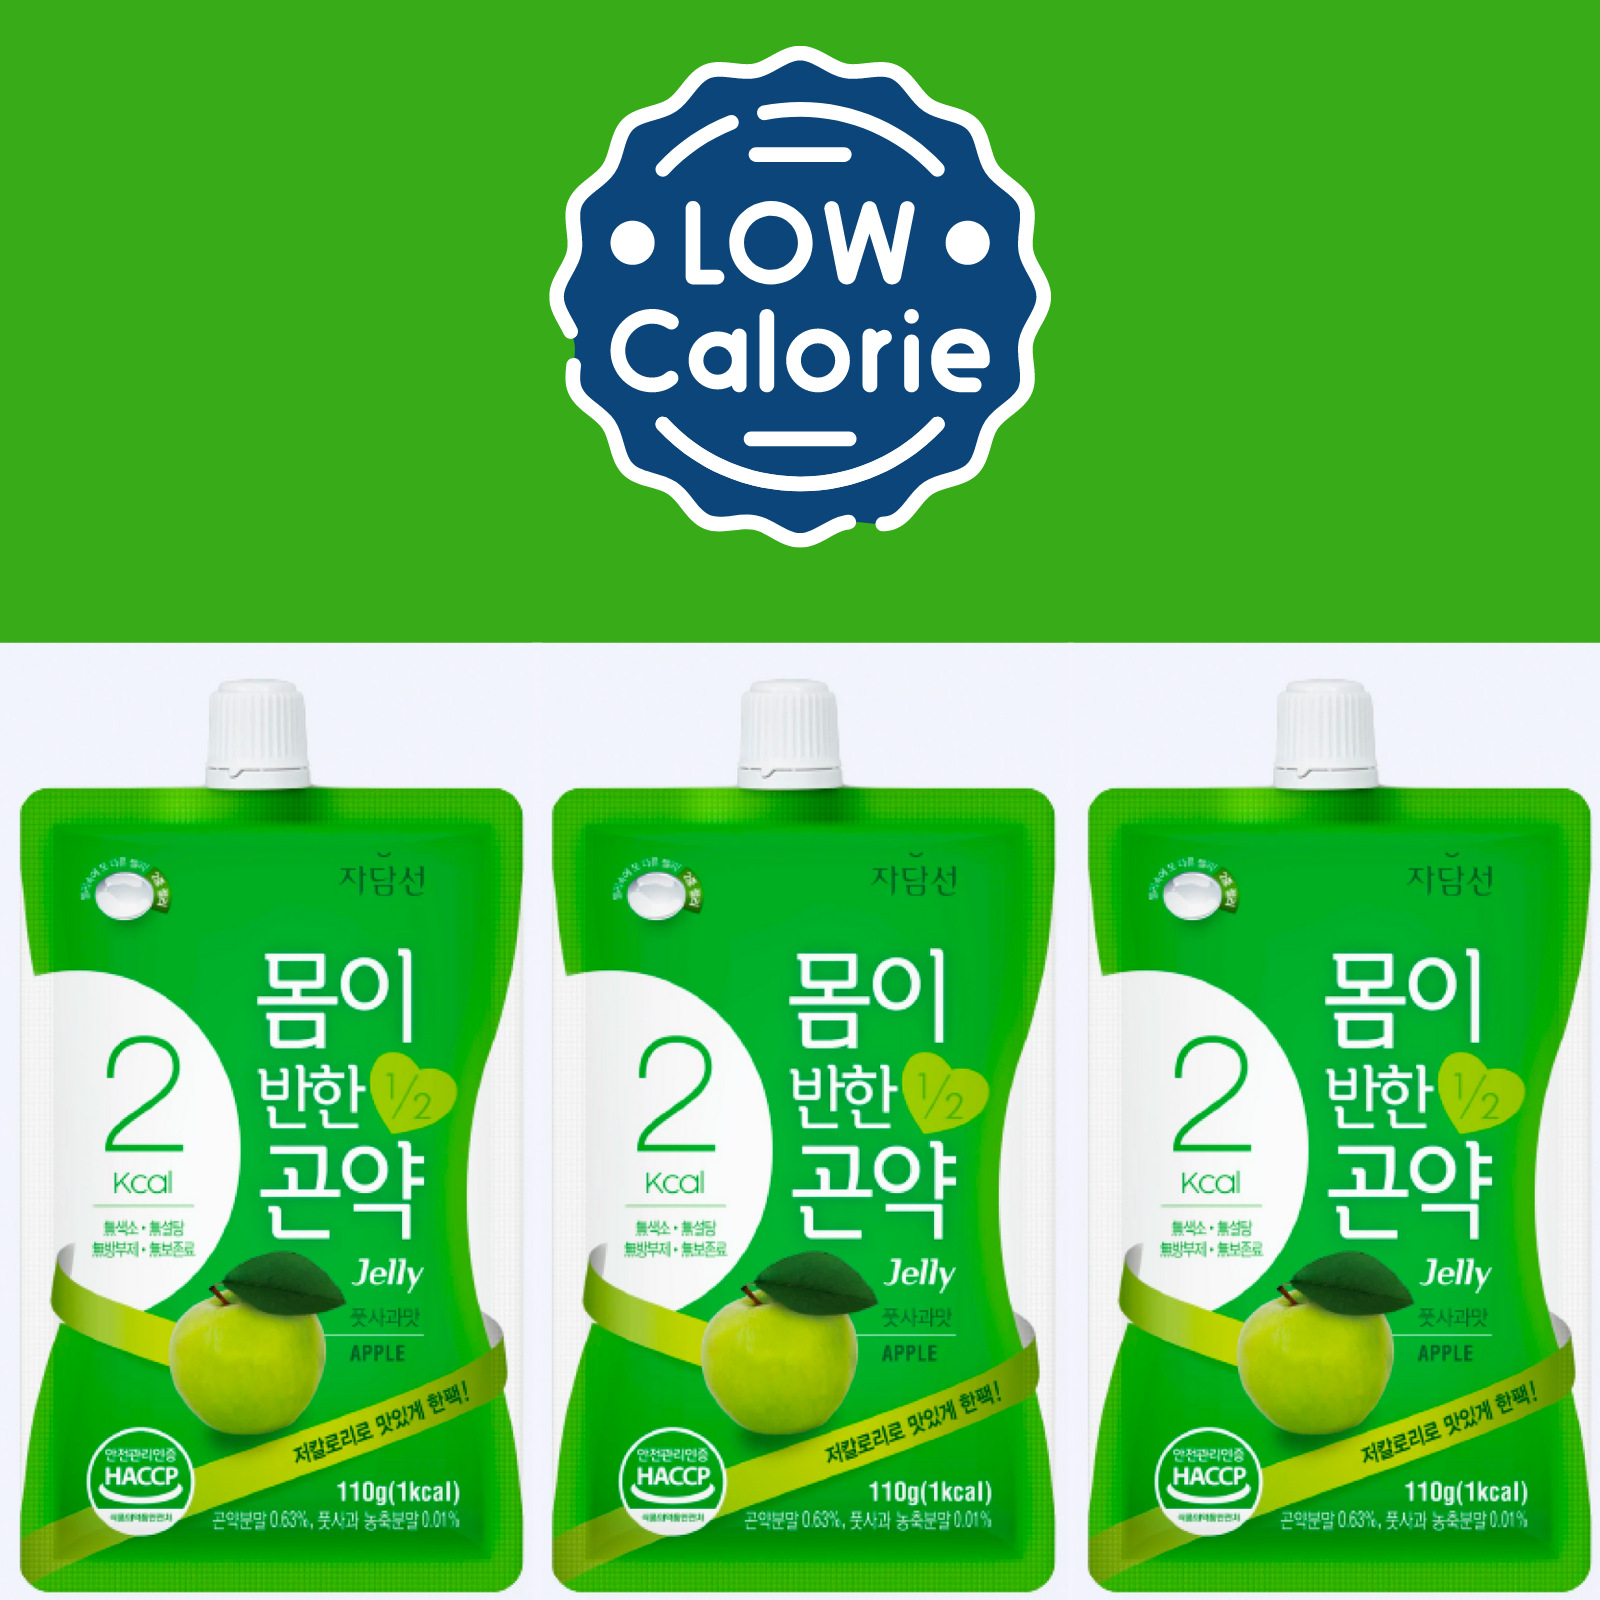 Healthy Low Calorie Double Konjac Jelly - Green Apple